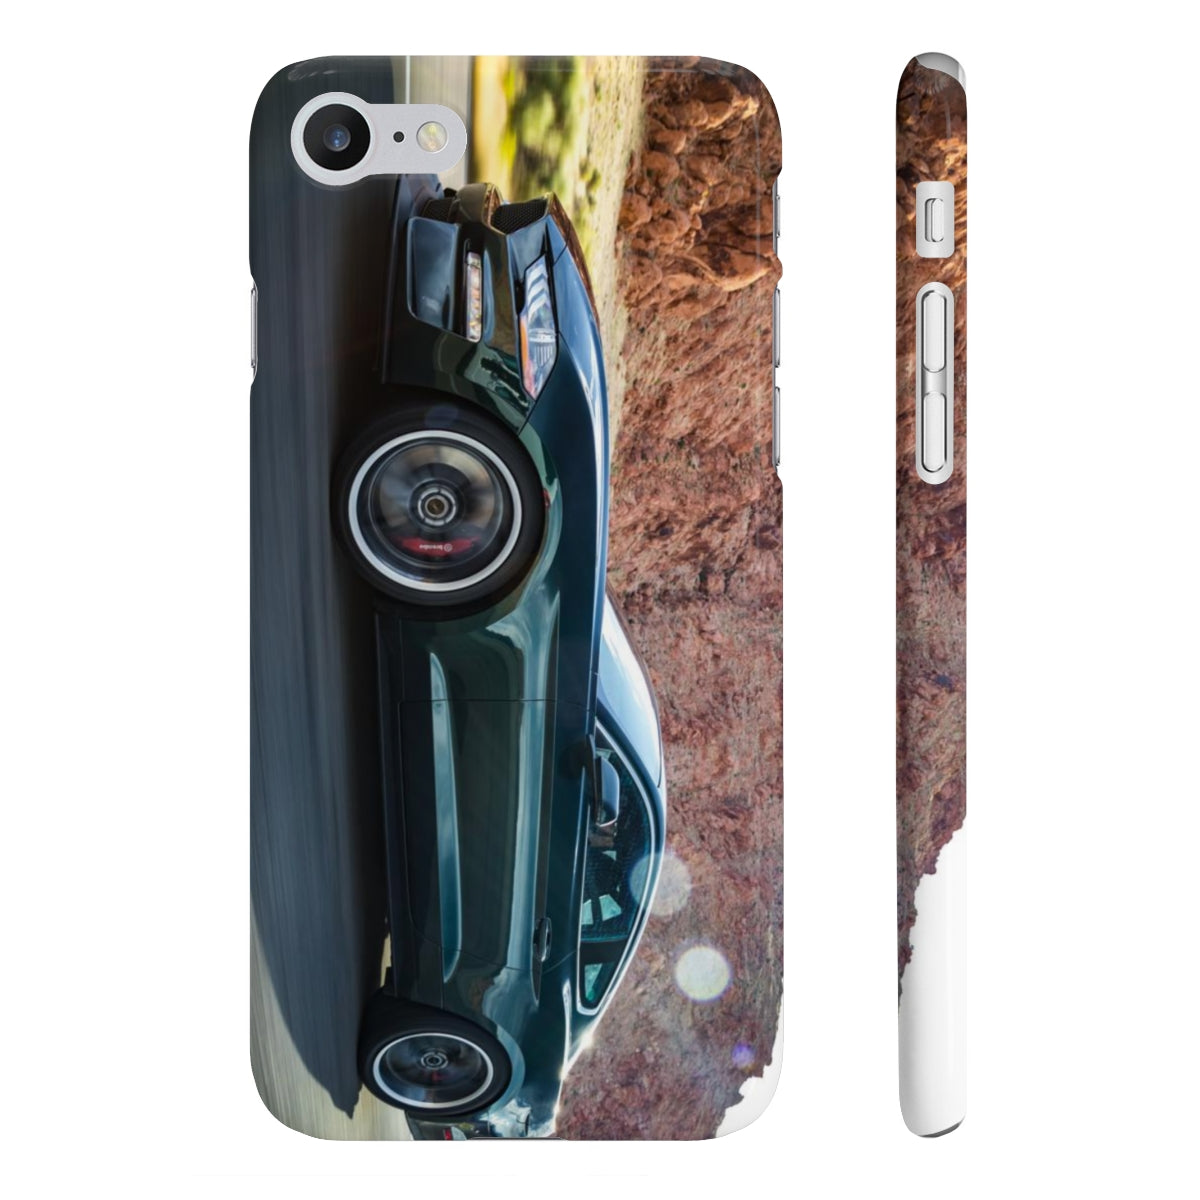 Steeda Steve McQueen Limited Edition Bullitt Mustang Image Slim Phone Cases for iPhone 6, 7 & 8